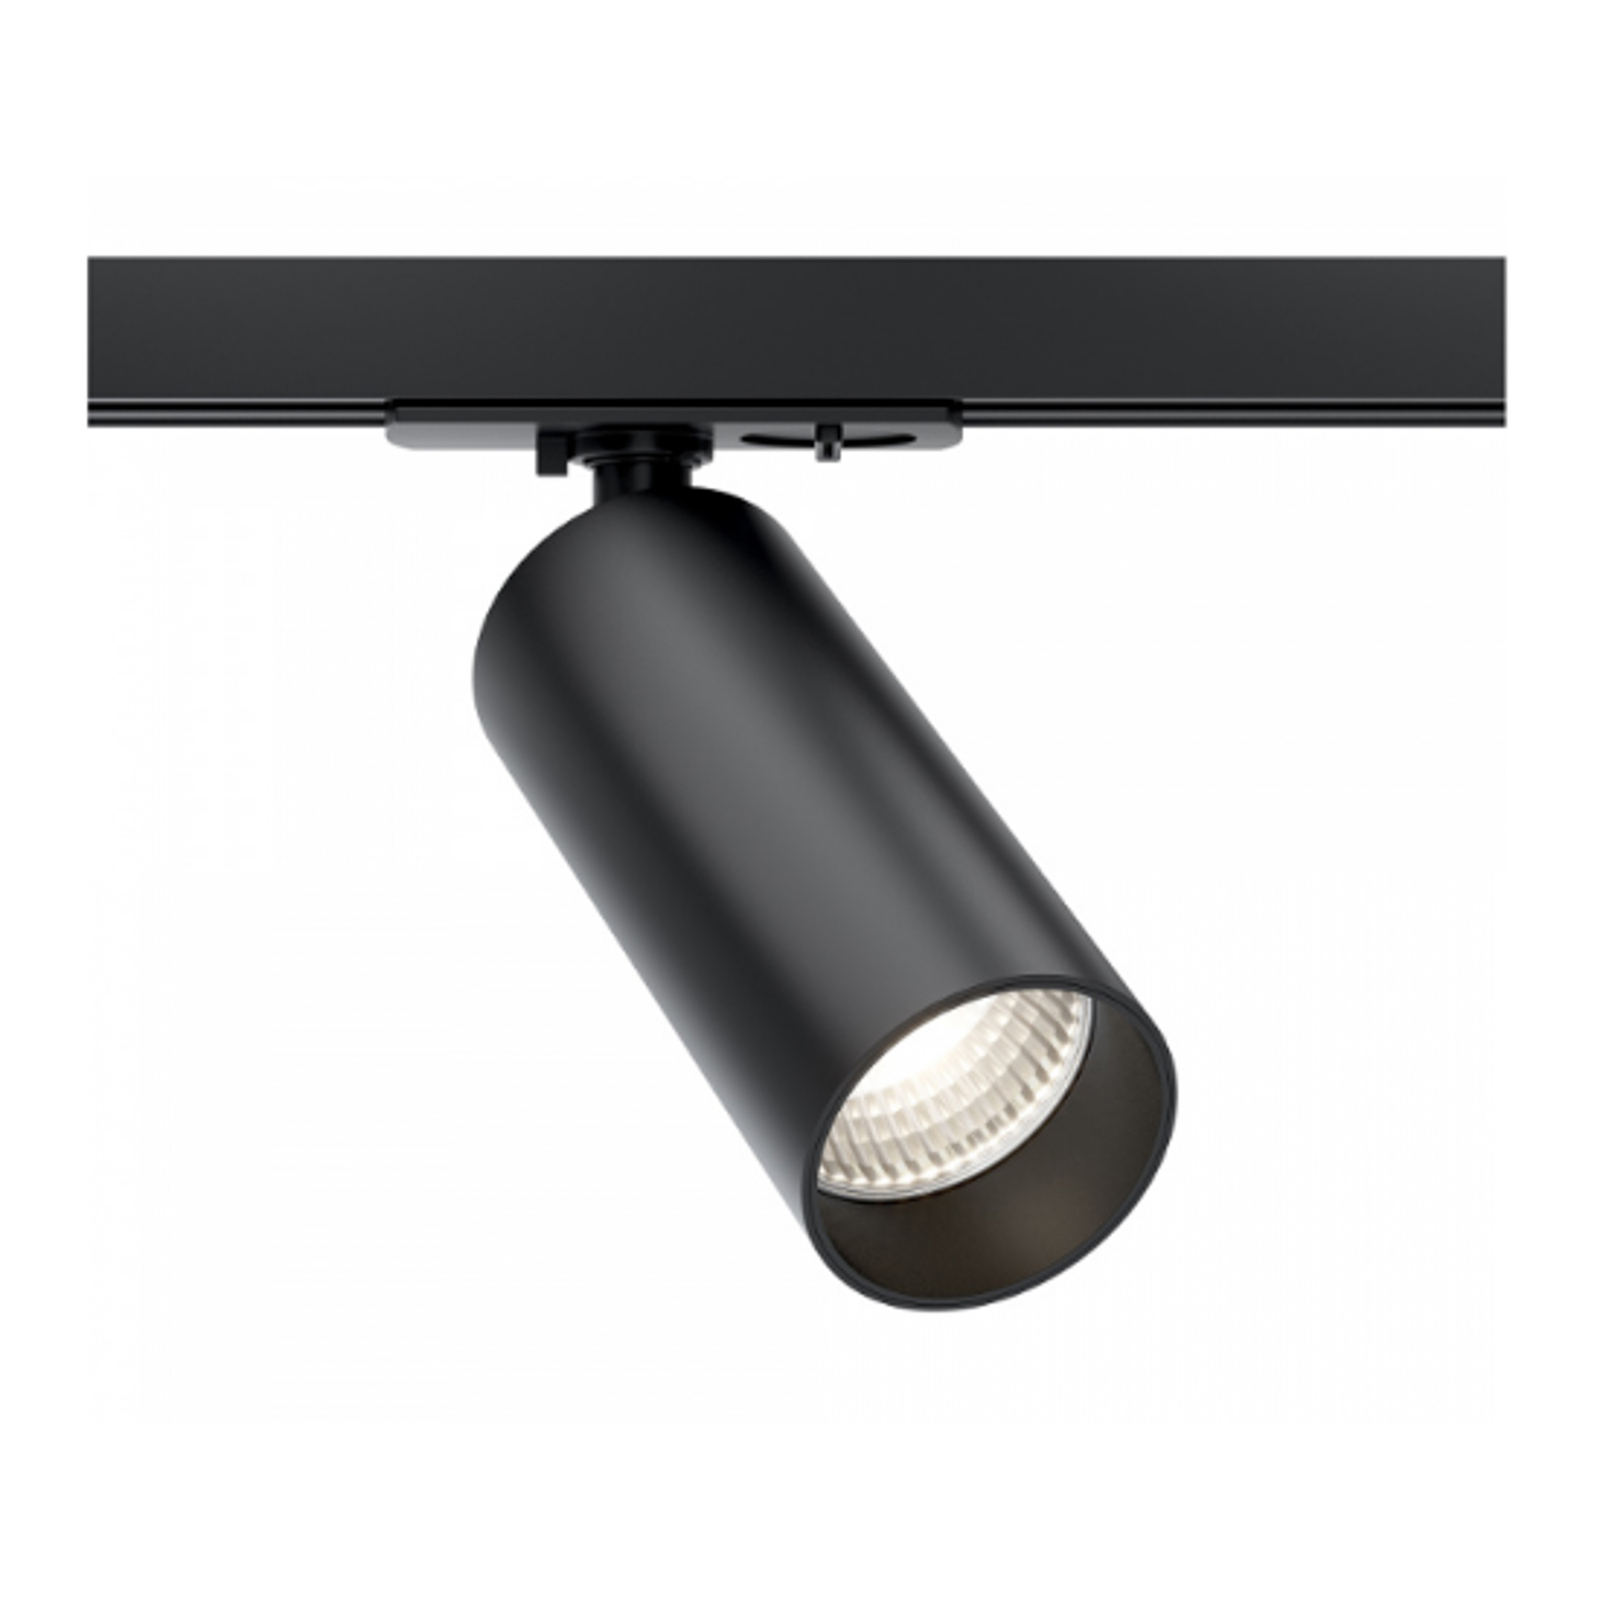 Maytoni Focus LED spot, Unity systeem, Triac, 930, zwart